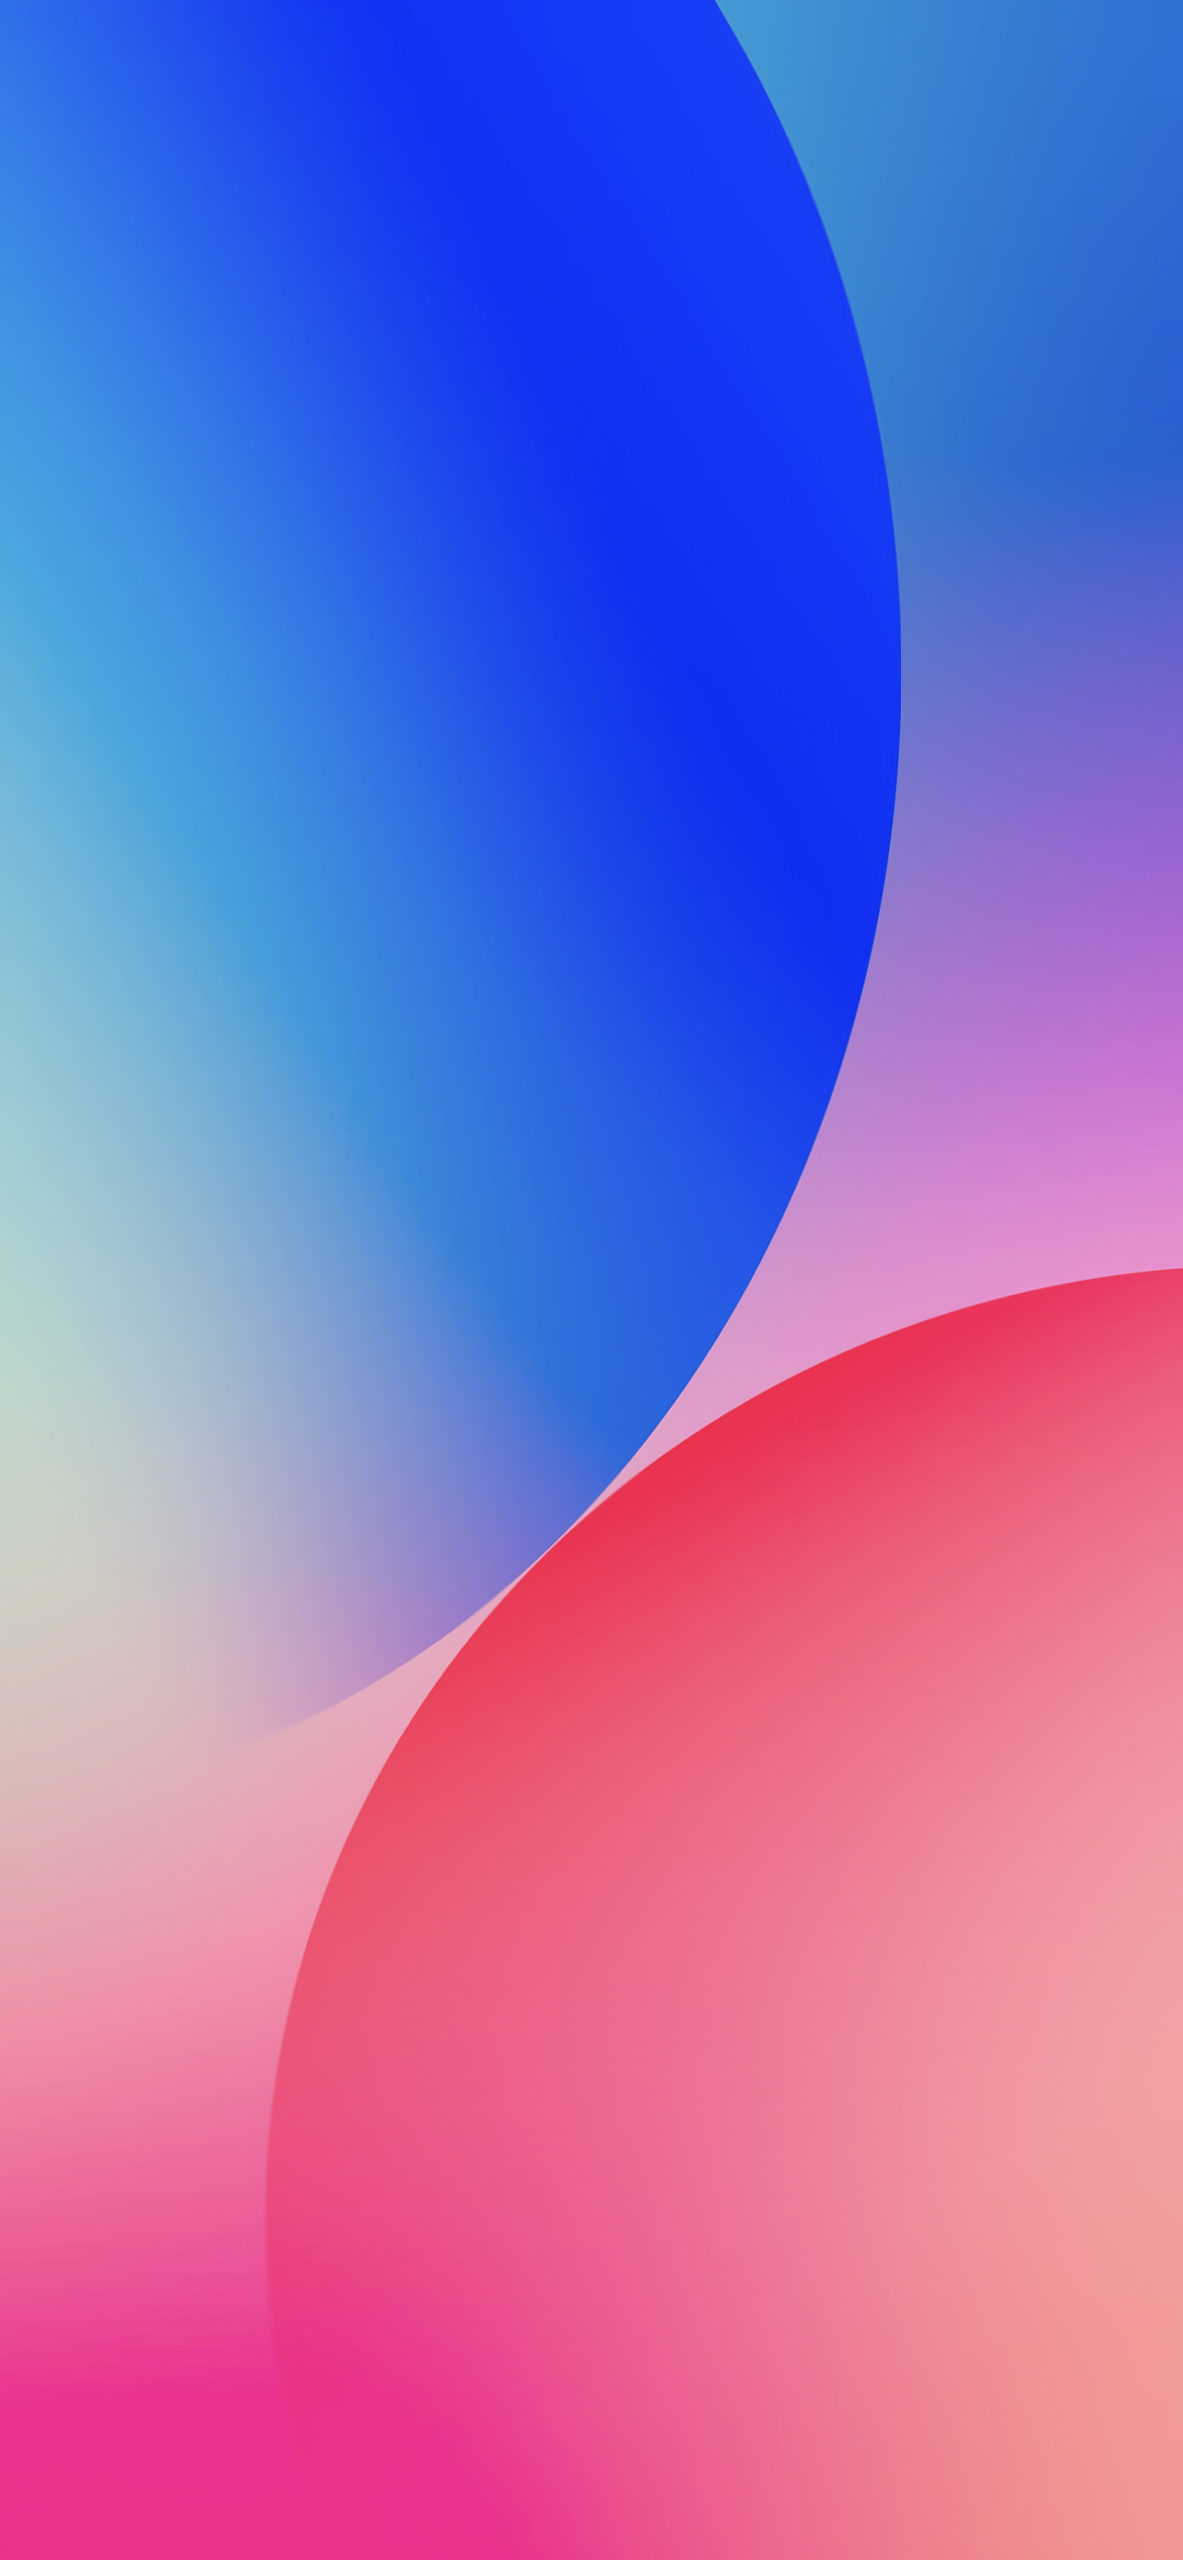 iOS16 Concept v2 2  Iphone wallpaper sky Phone wallpaper images Xiaomi  wallpapers